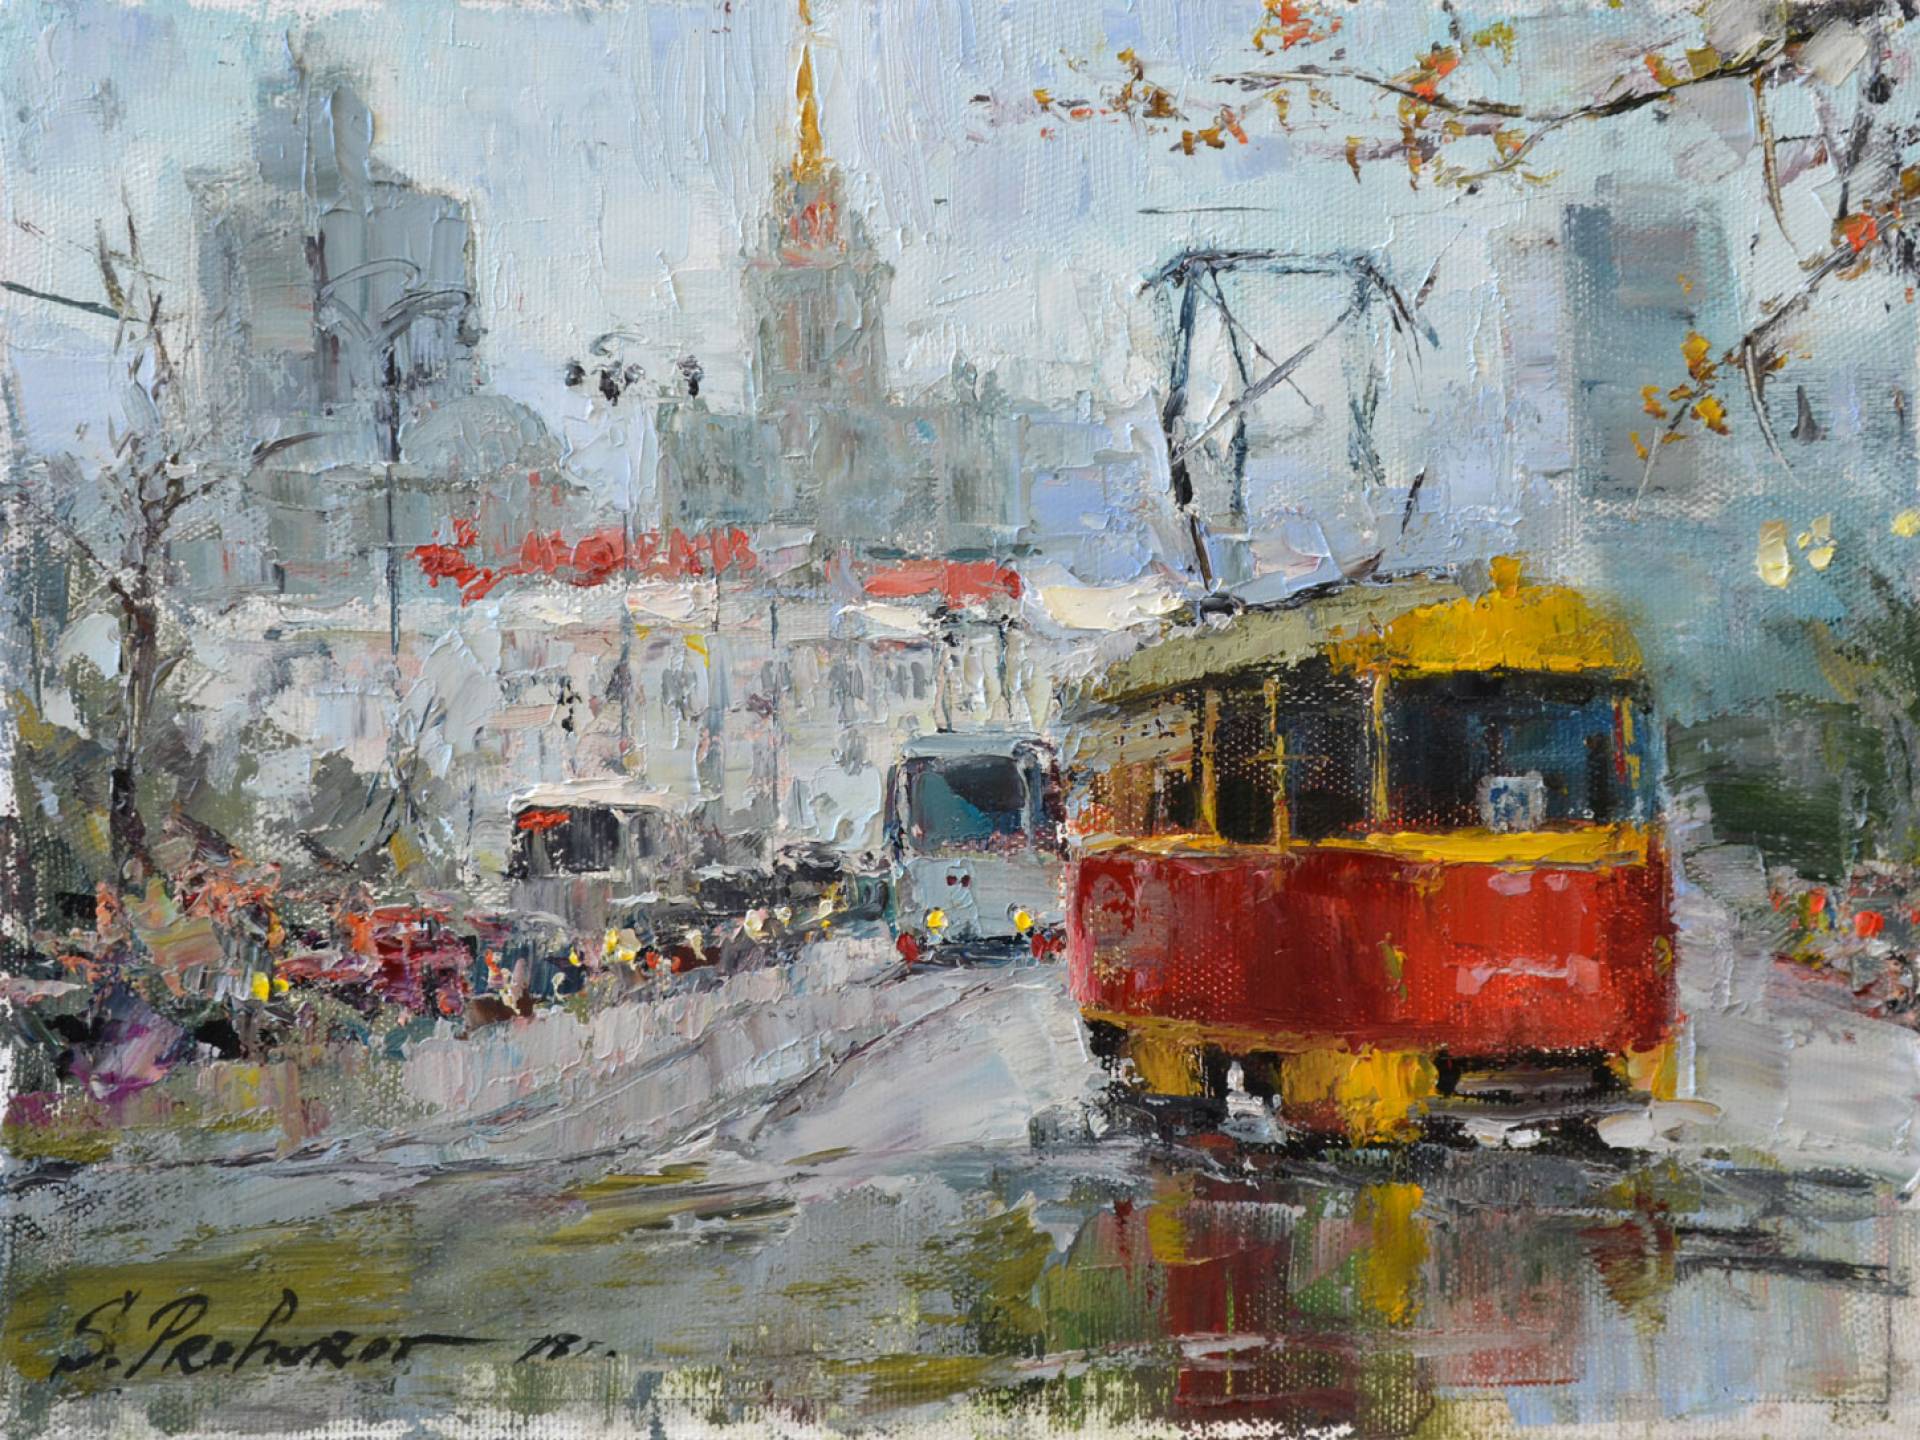 Red Tram, Sergei Prokhorov, Buy the painting Oil